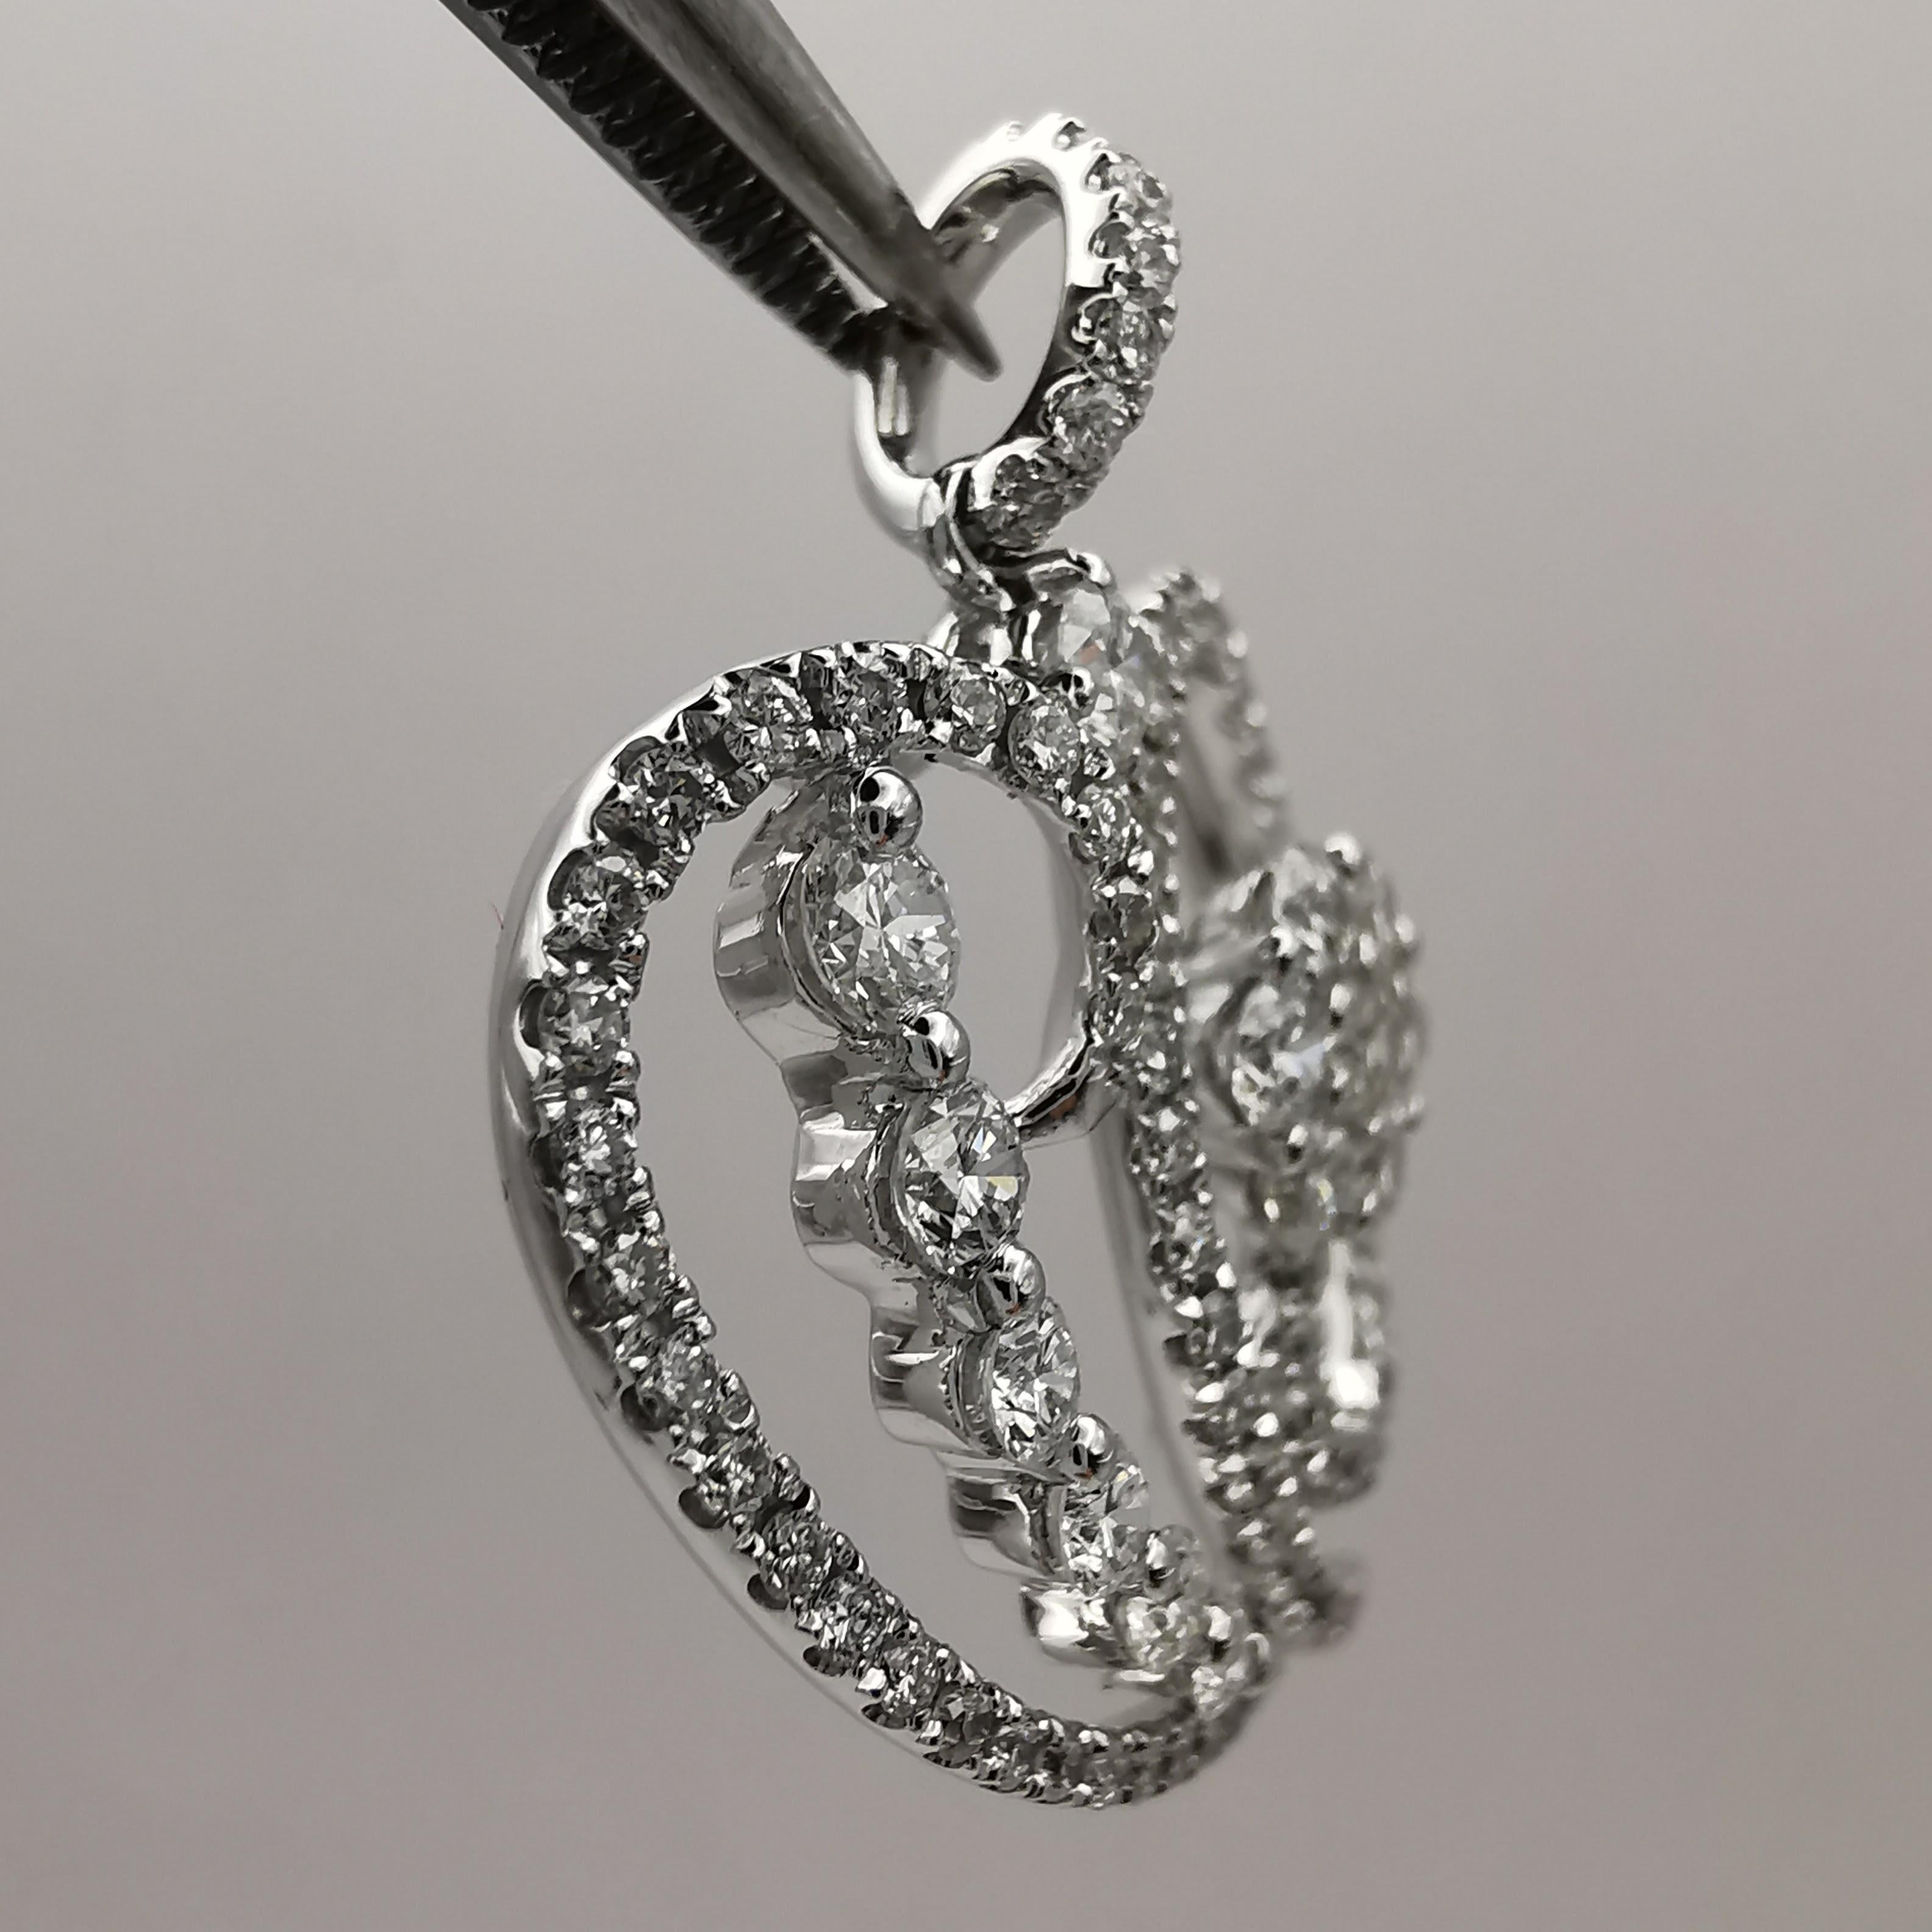 Heart-shaped Bell Pepper .97 Carat Diamond 18K White Gold Pendant Necklace For Sale 5